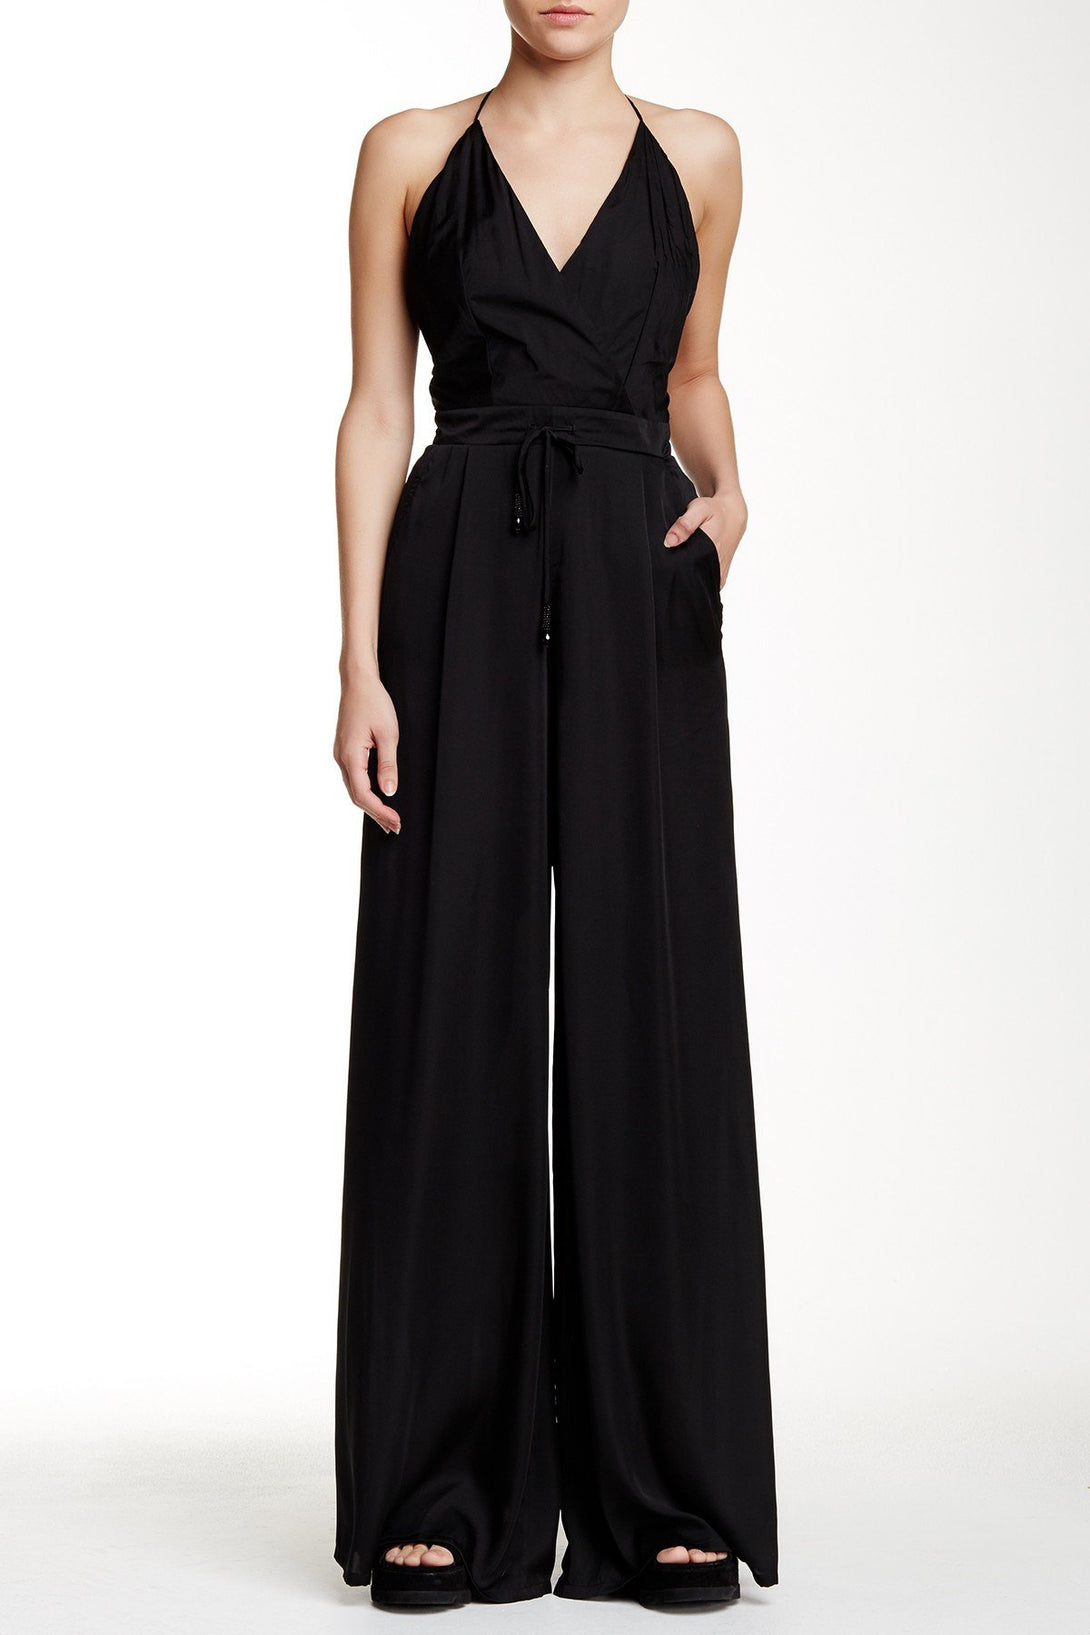 Silk-Solid-Black-Designer-Jumpsuit-From-Shahida-Parides